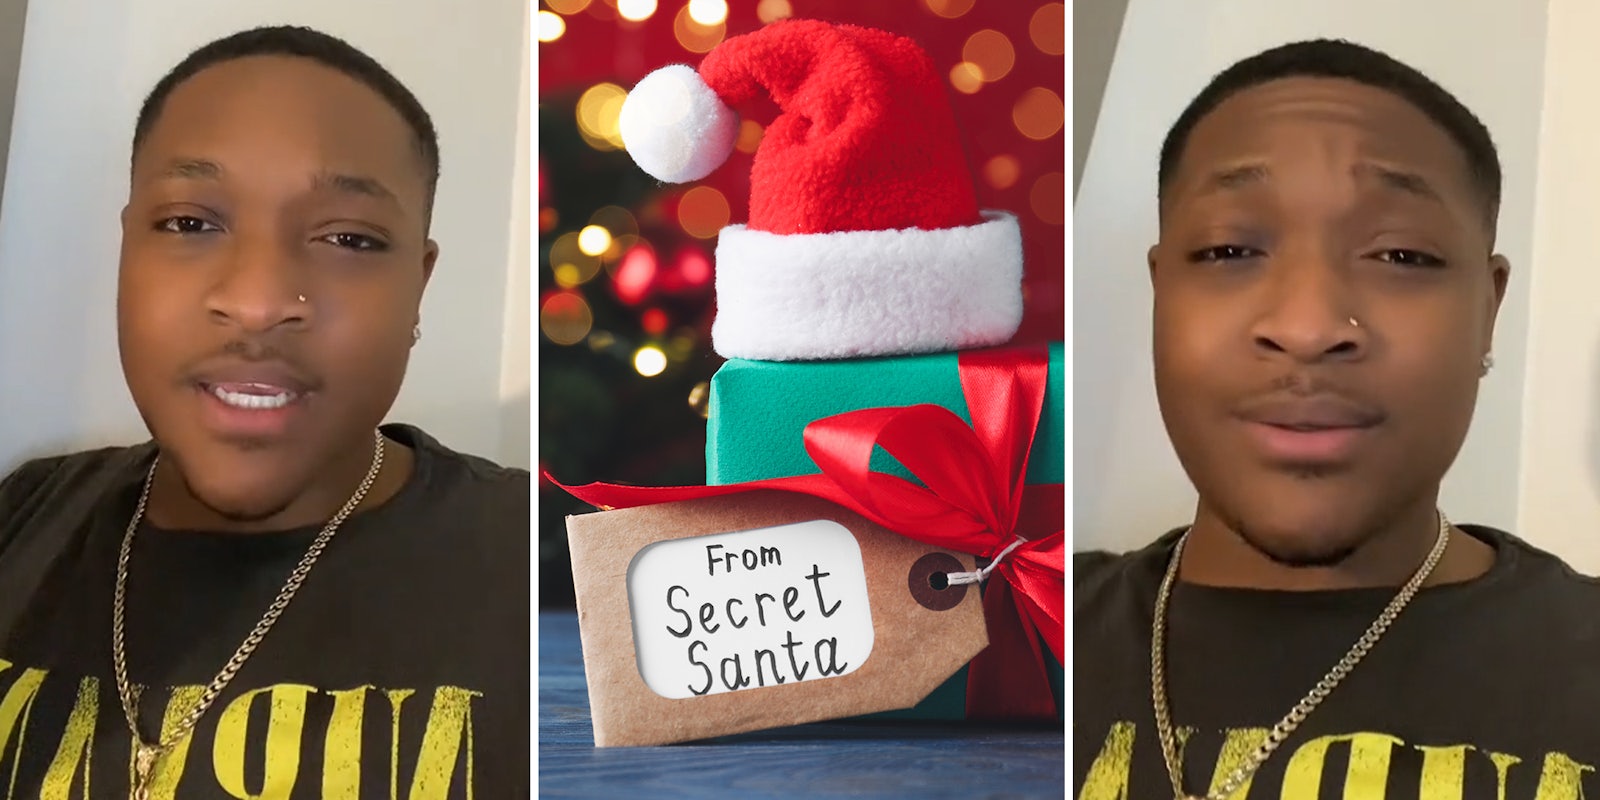 Office worker gets fired over his Secret Santa